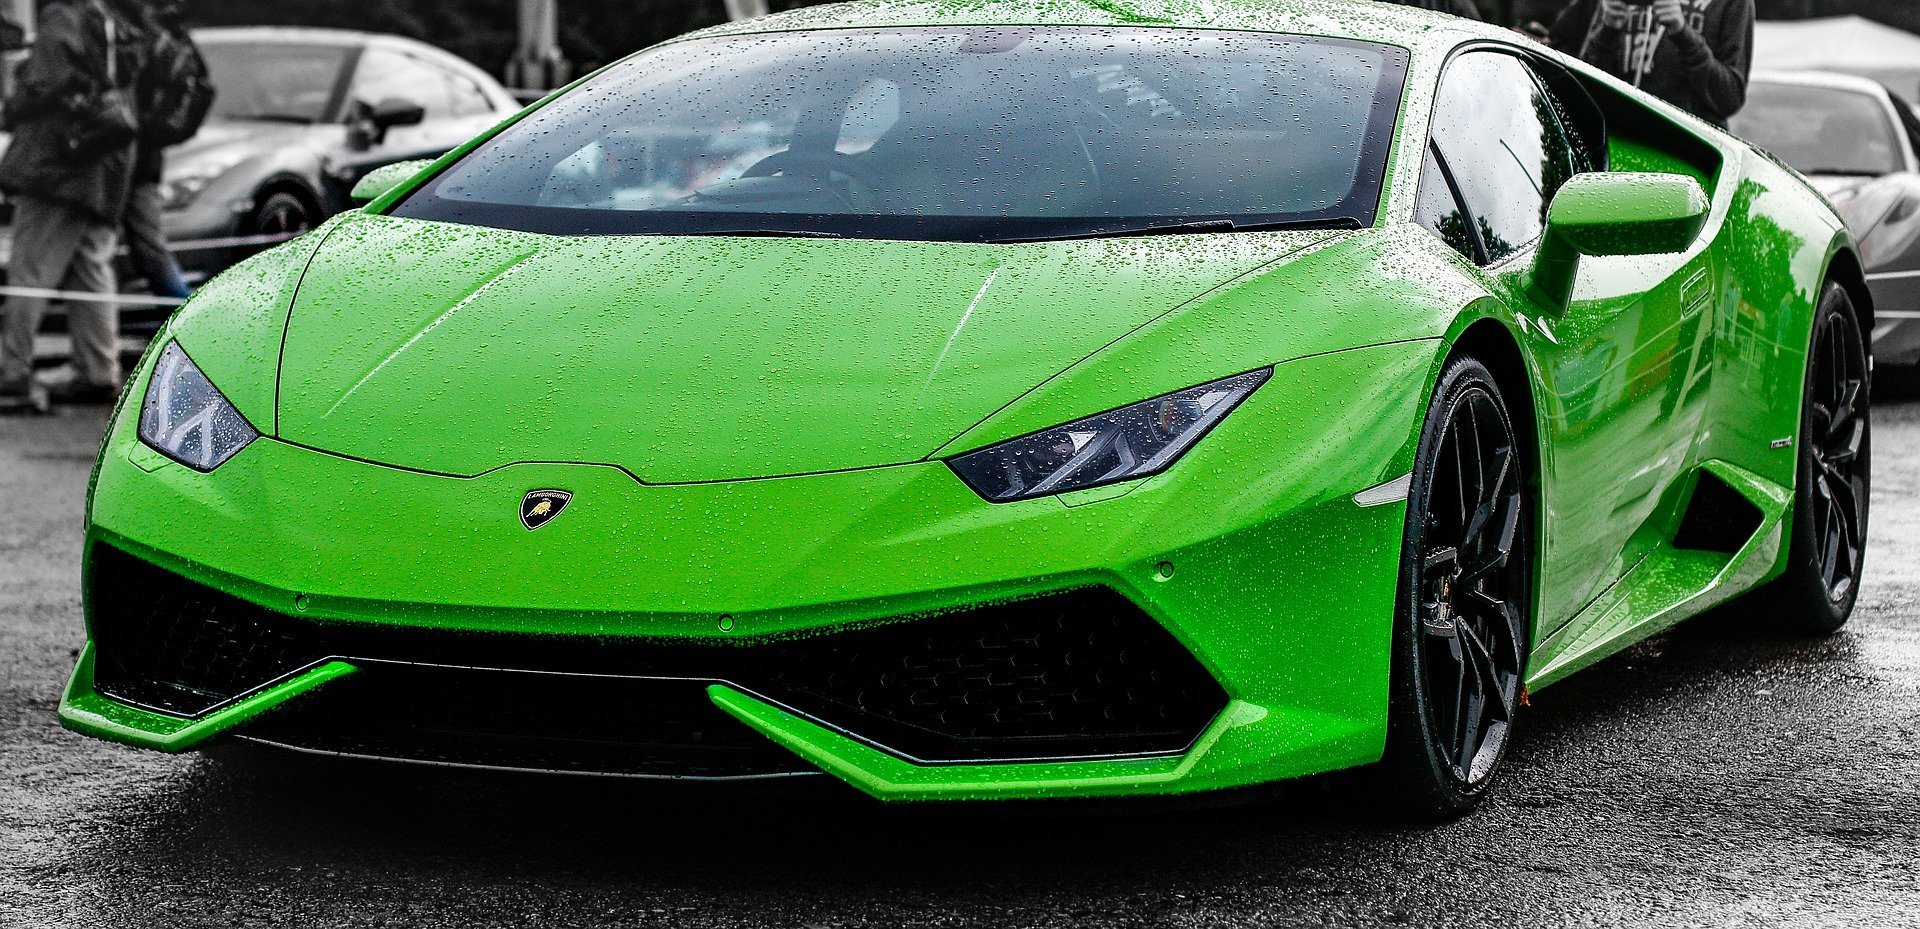 Lamborghini Huracan. | Source: Toby Parsons/Pixabay